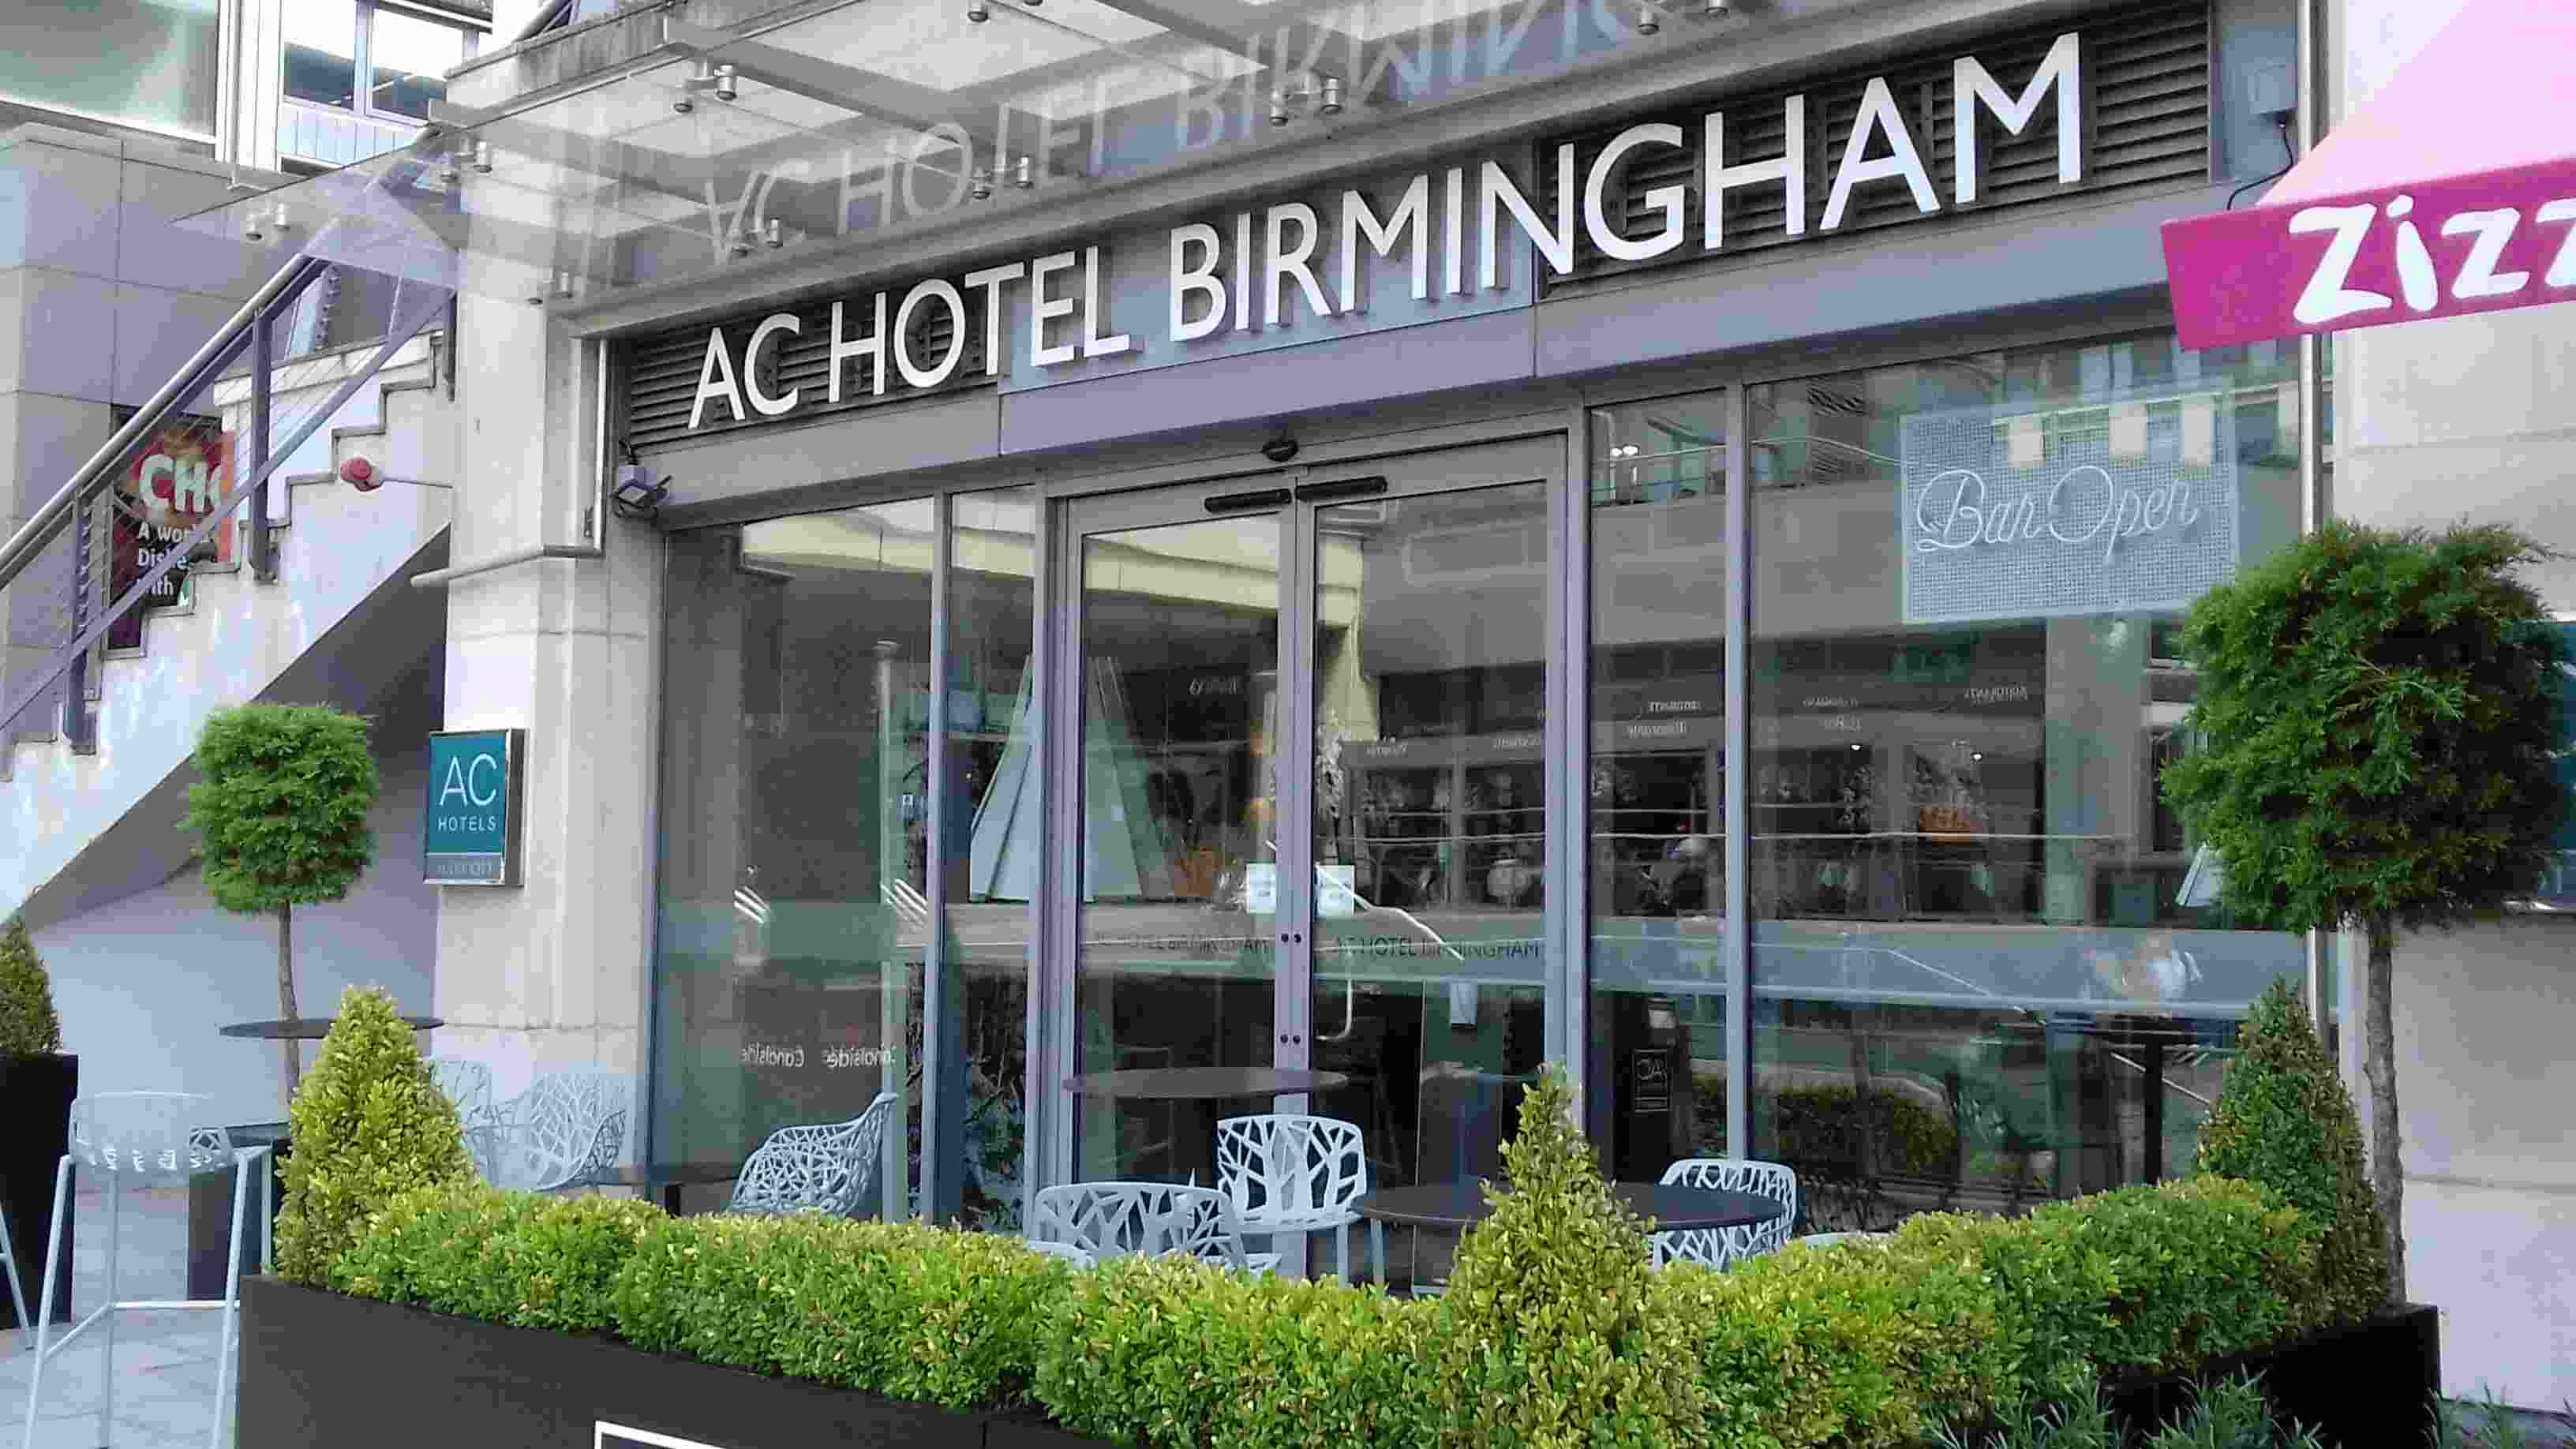 ImagesBirmingham/Birmingham Hotel AC, Mailbox.jpg